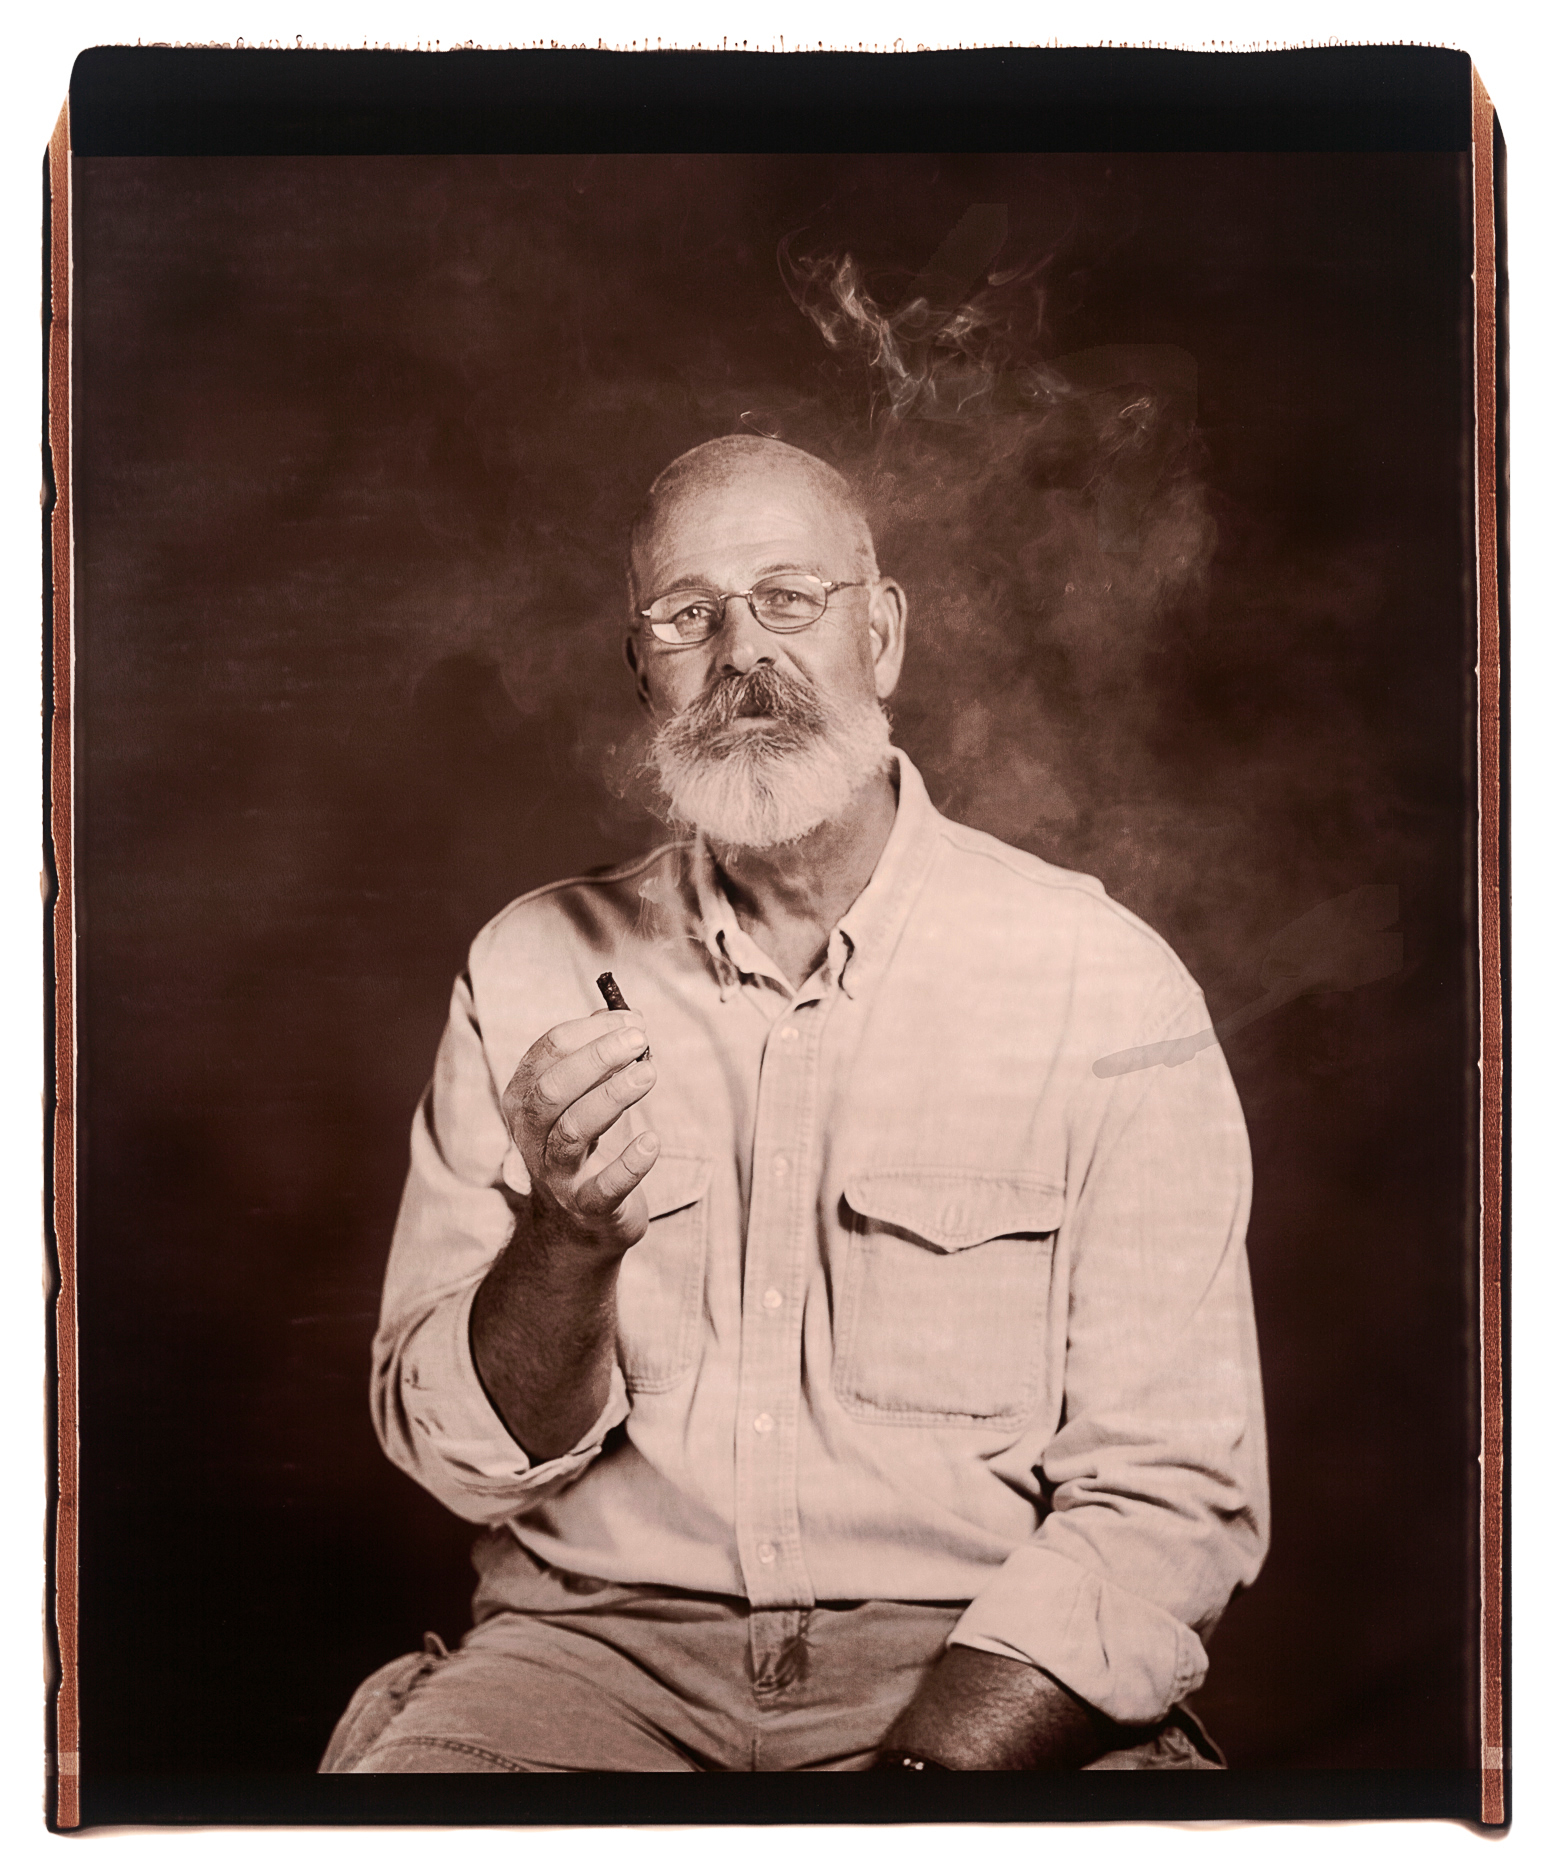 20x24" Black & White Polaroid portrait of lone male subject